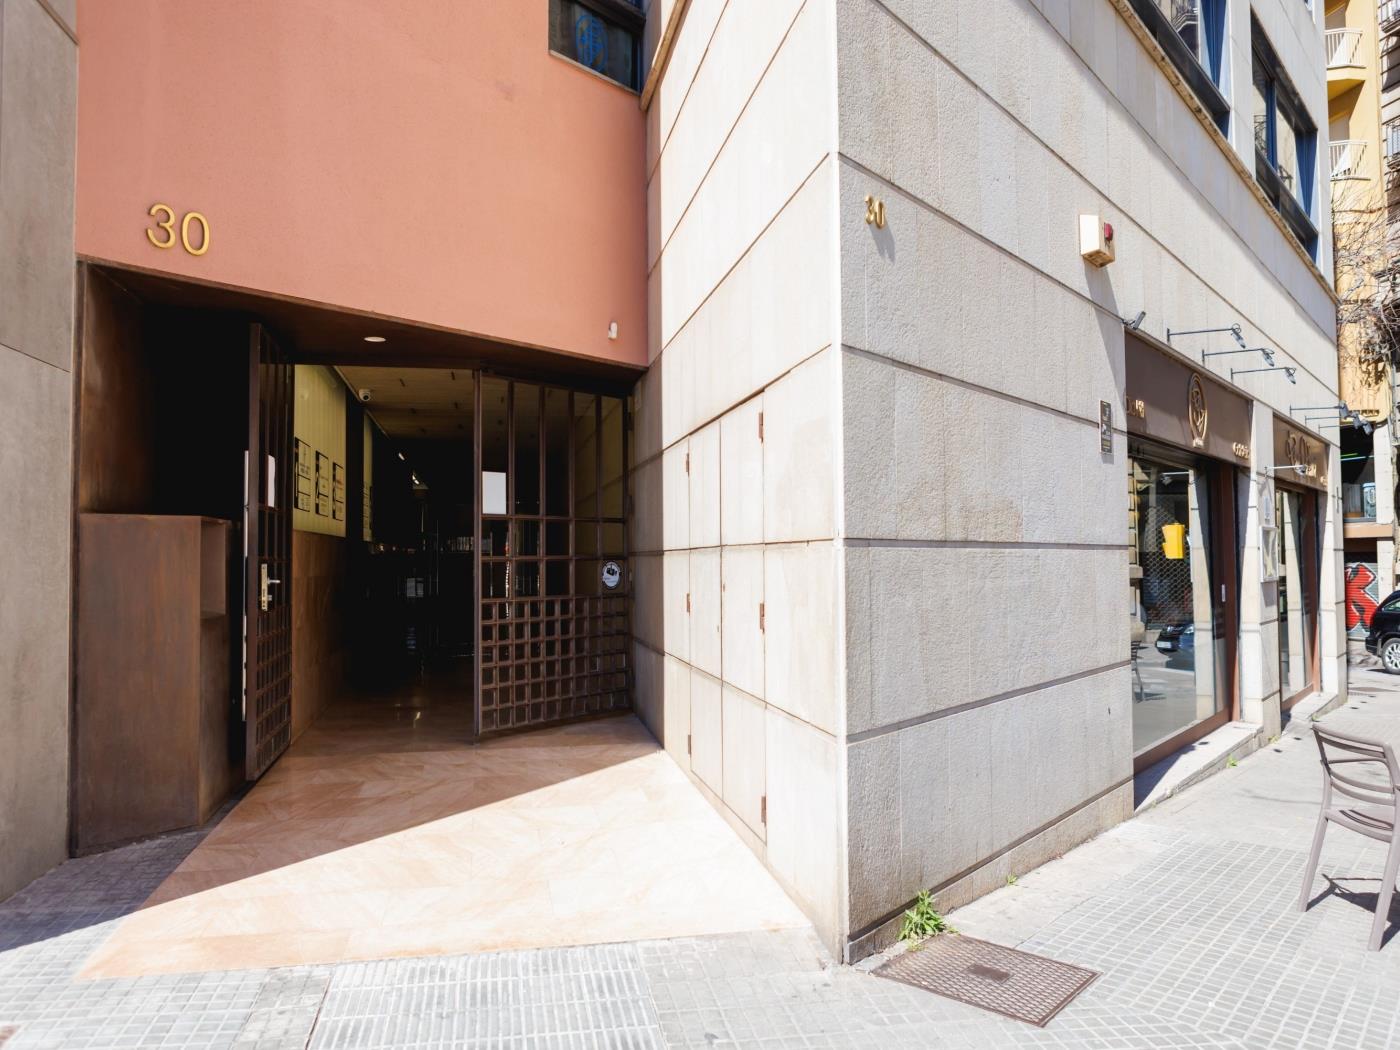 Bravissimo Centre, modern pis de 2 habitacions a Girona